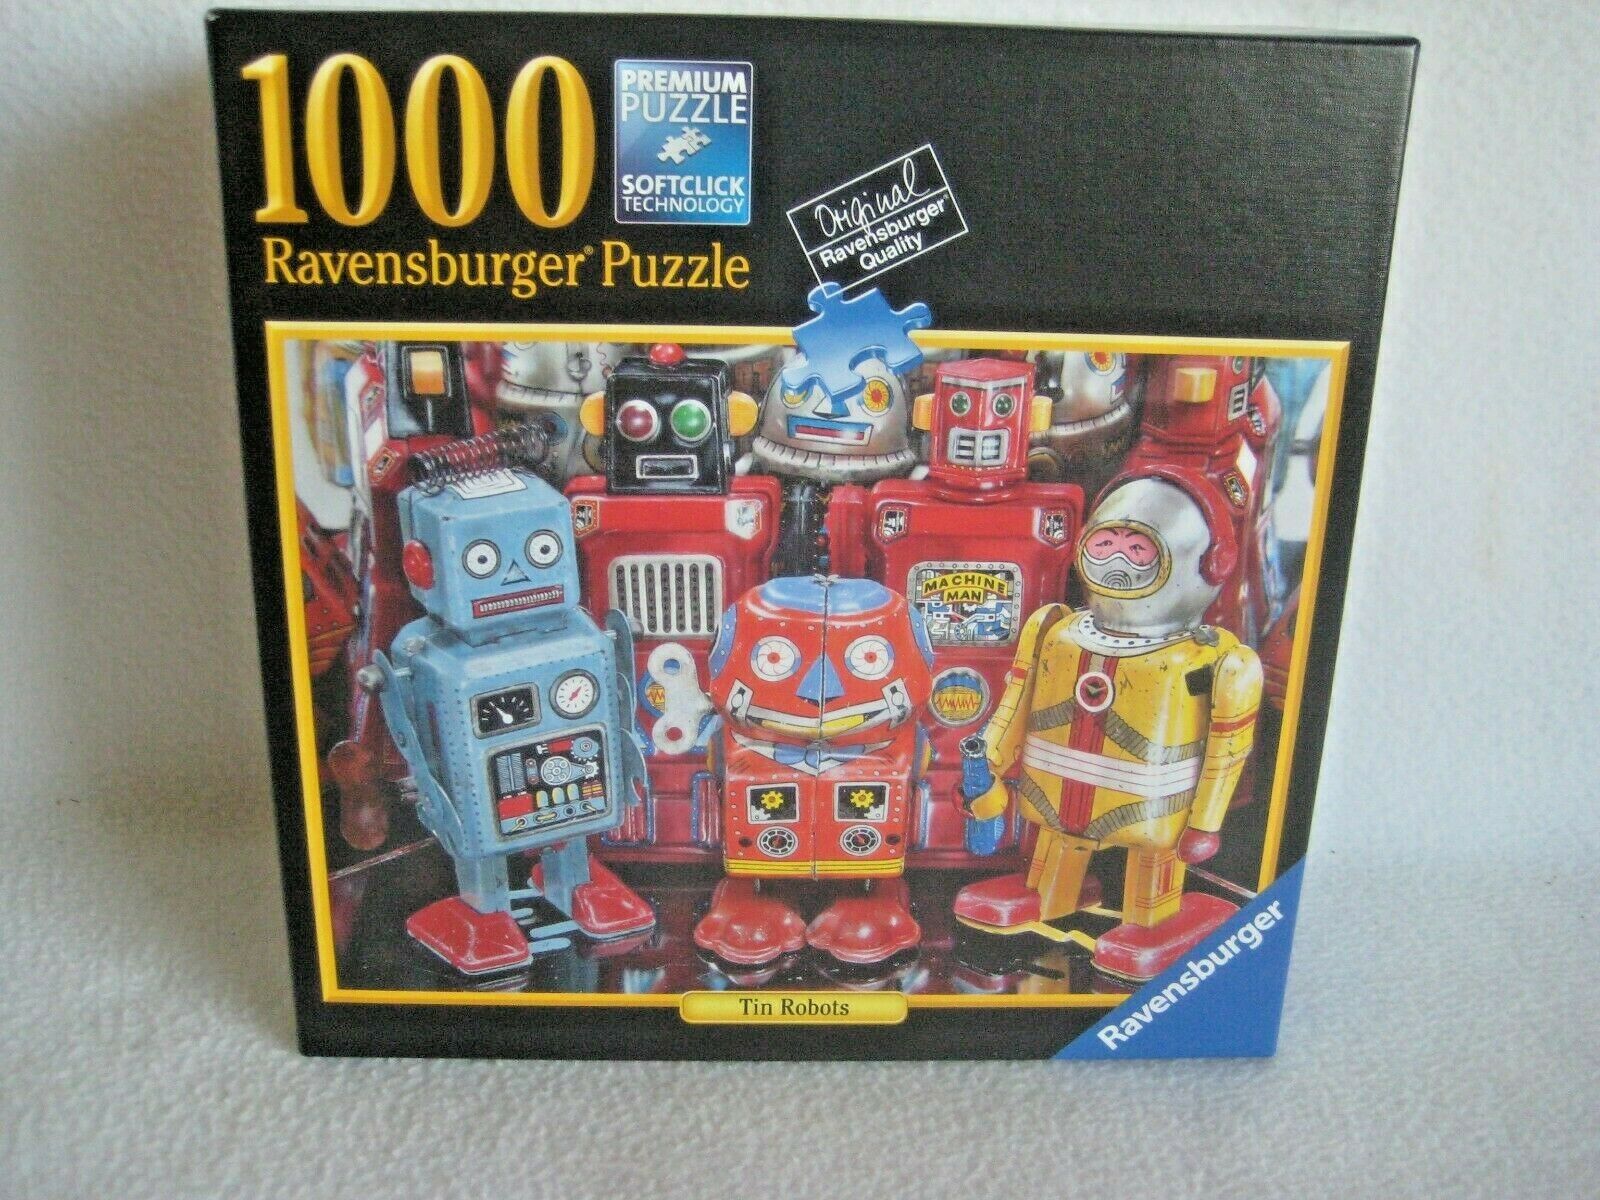 Ravensburger Tin Robots Jigsaw Puzzle 1000 Piece Complete